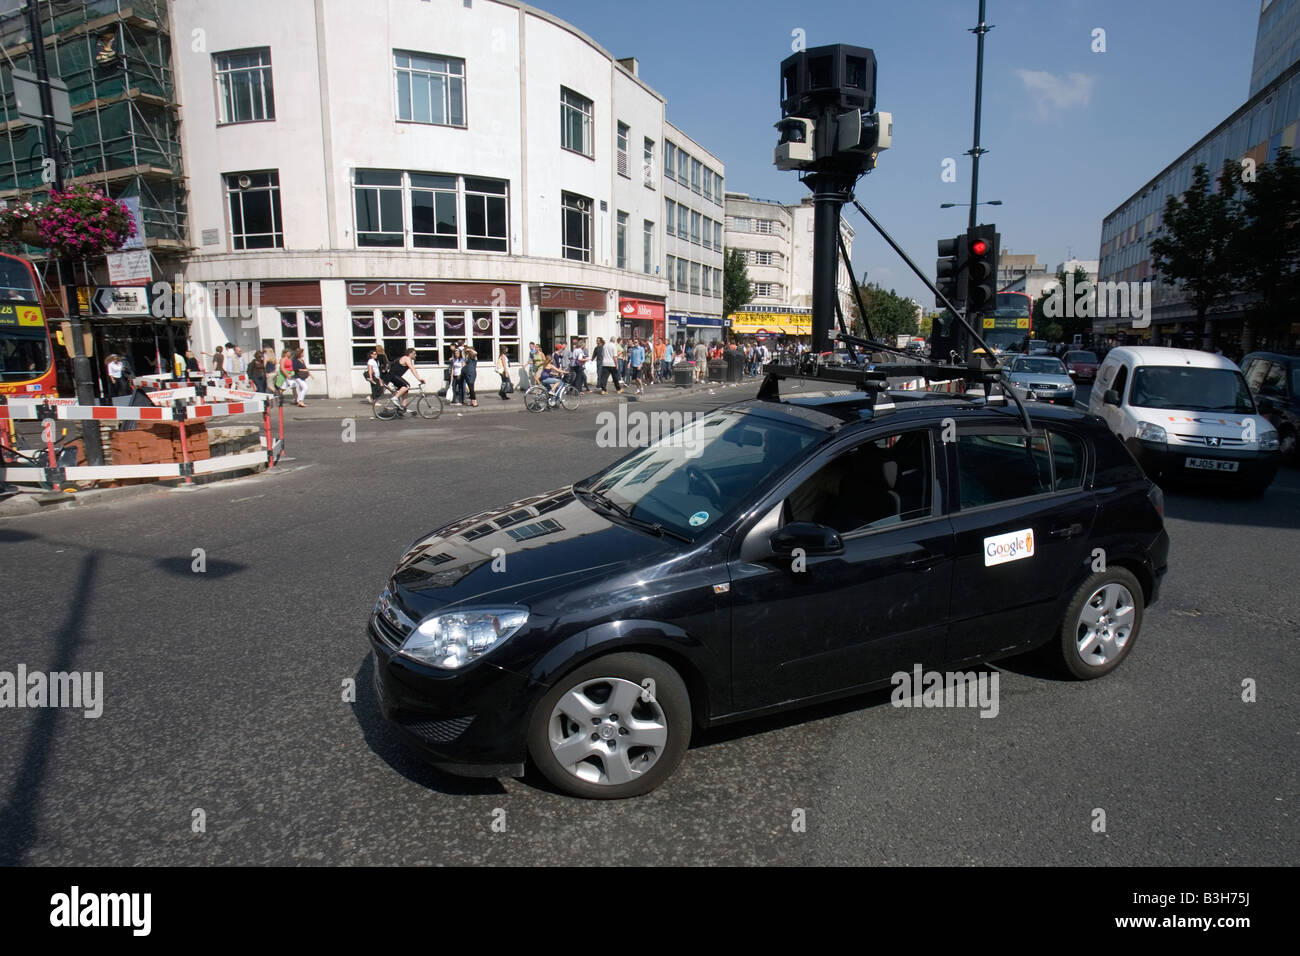 google street view car in london Stock Photo